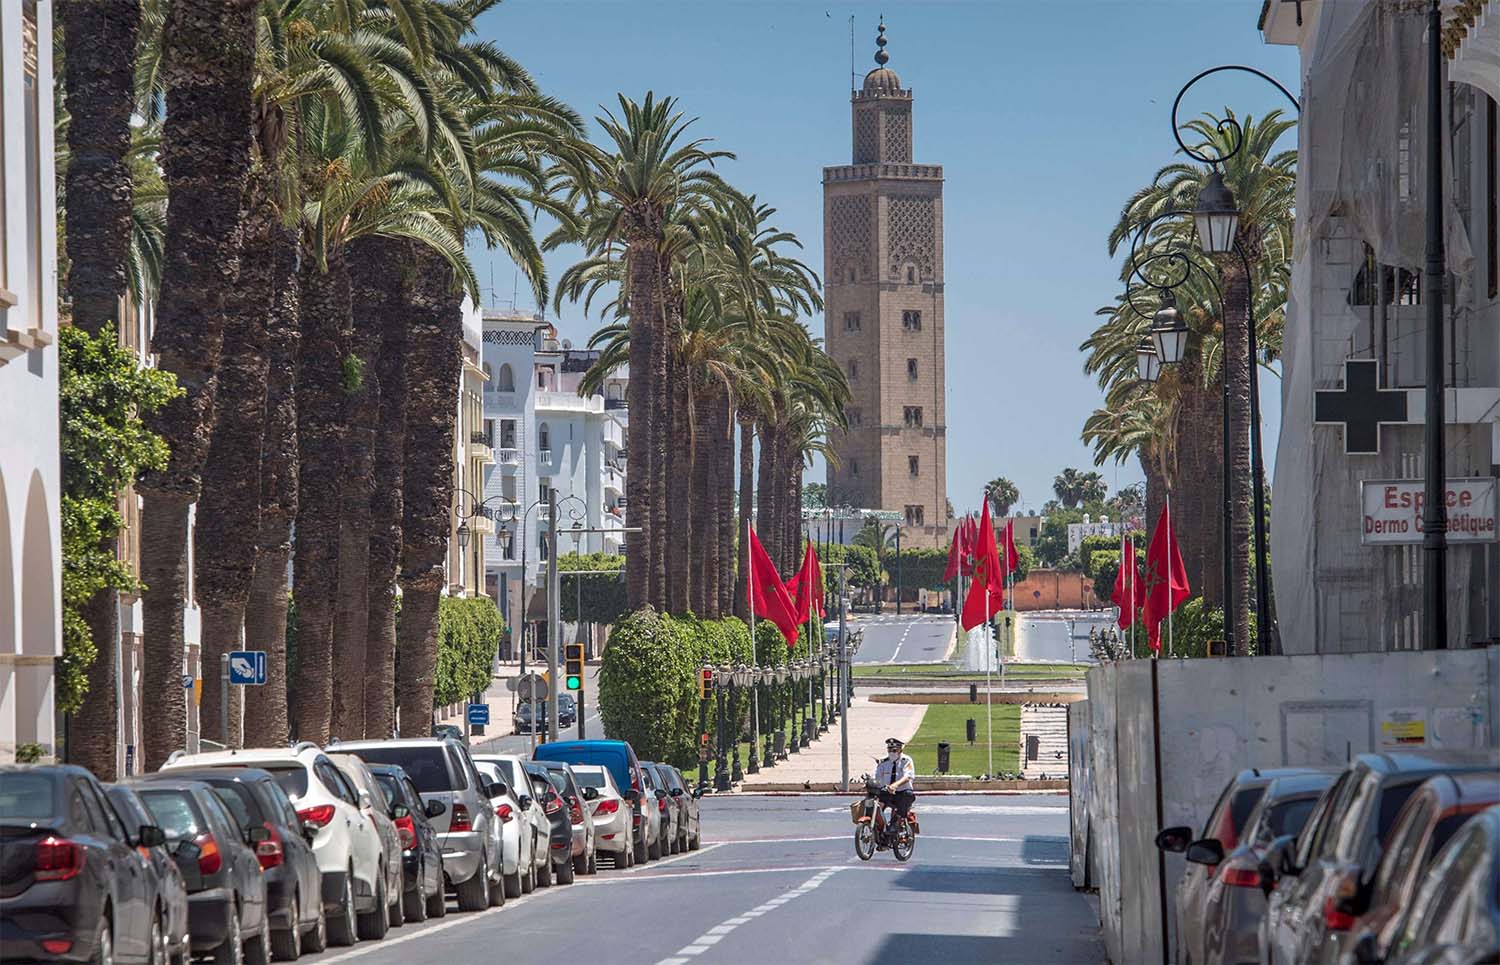 Deserted street in Rabat